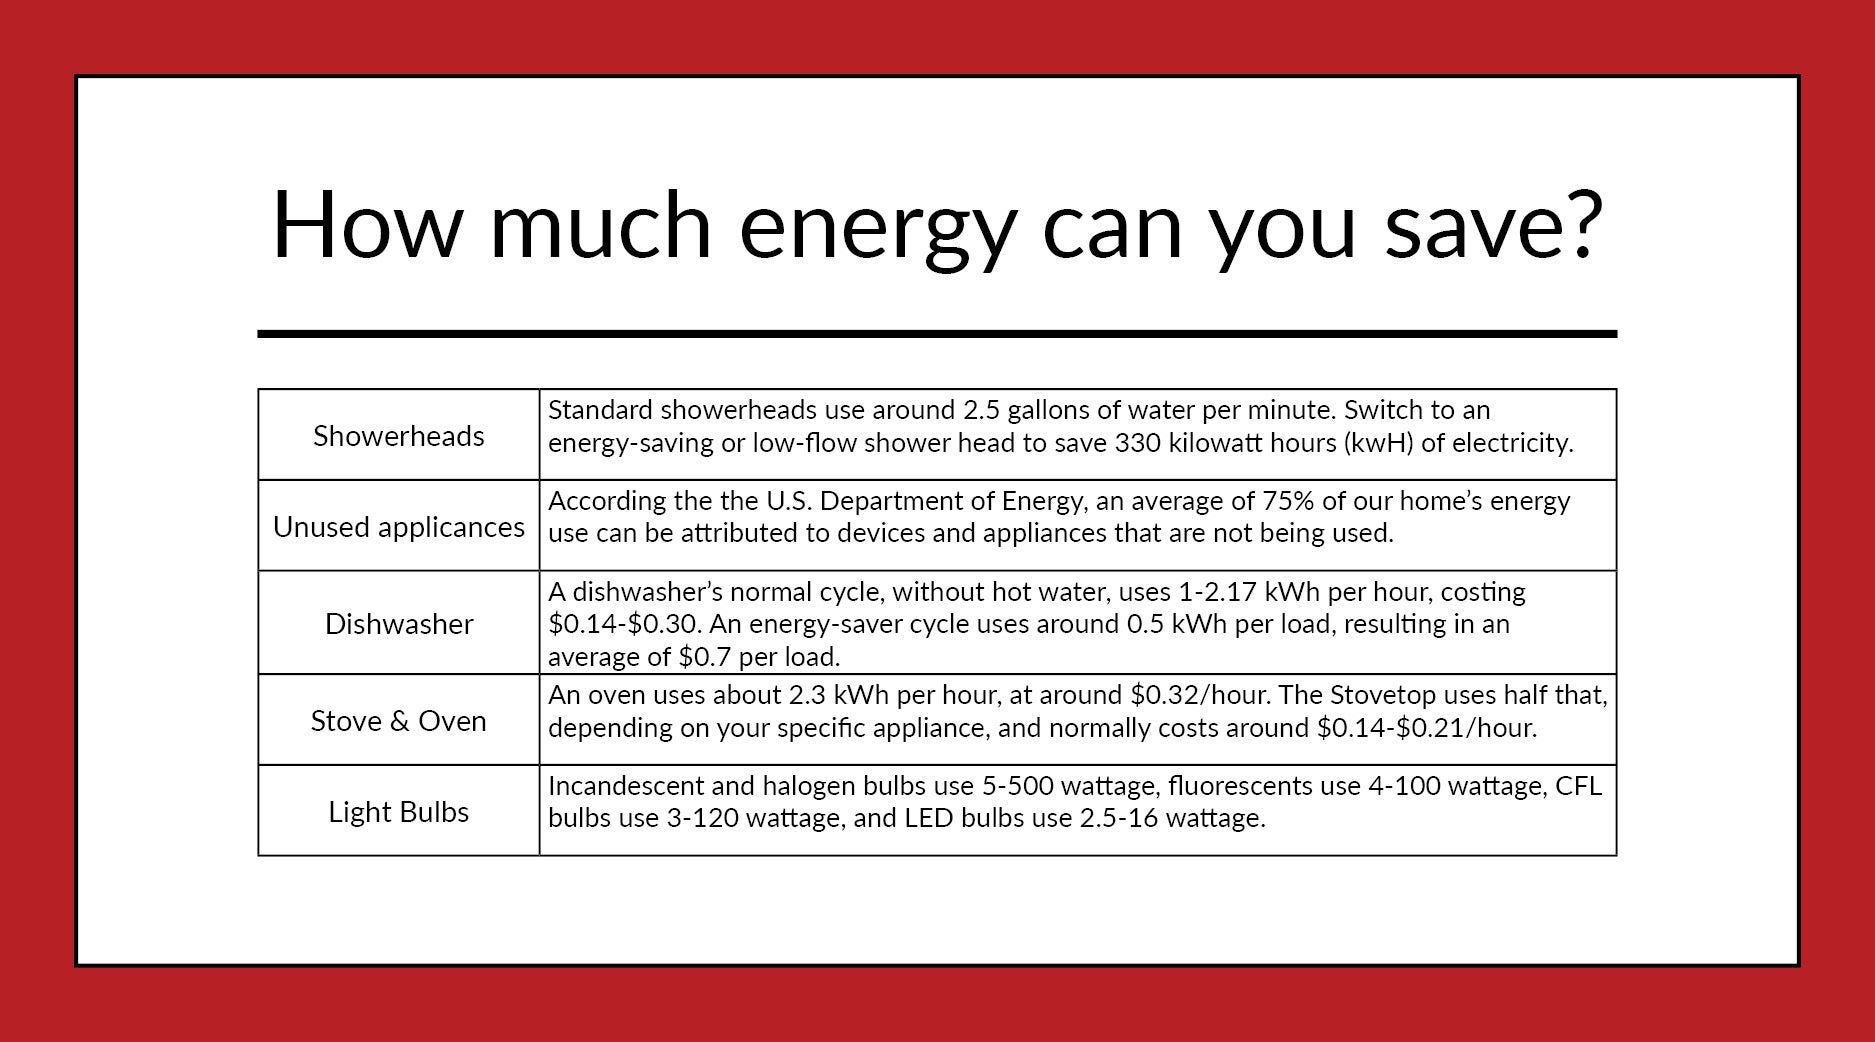 Table summarizing home appliances' energy use